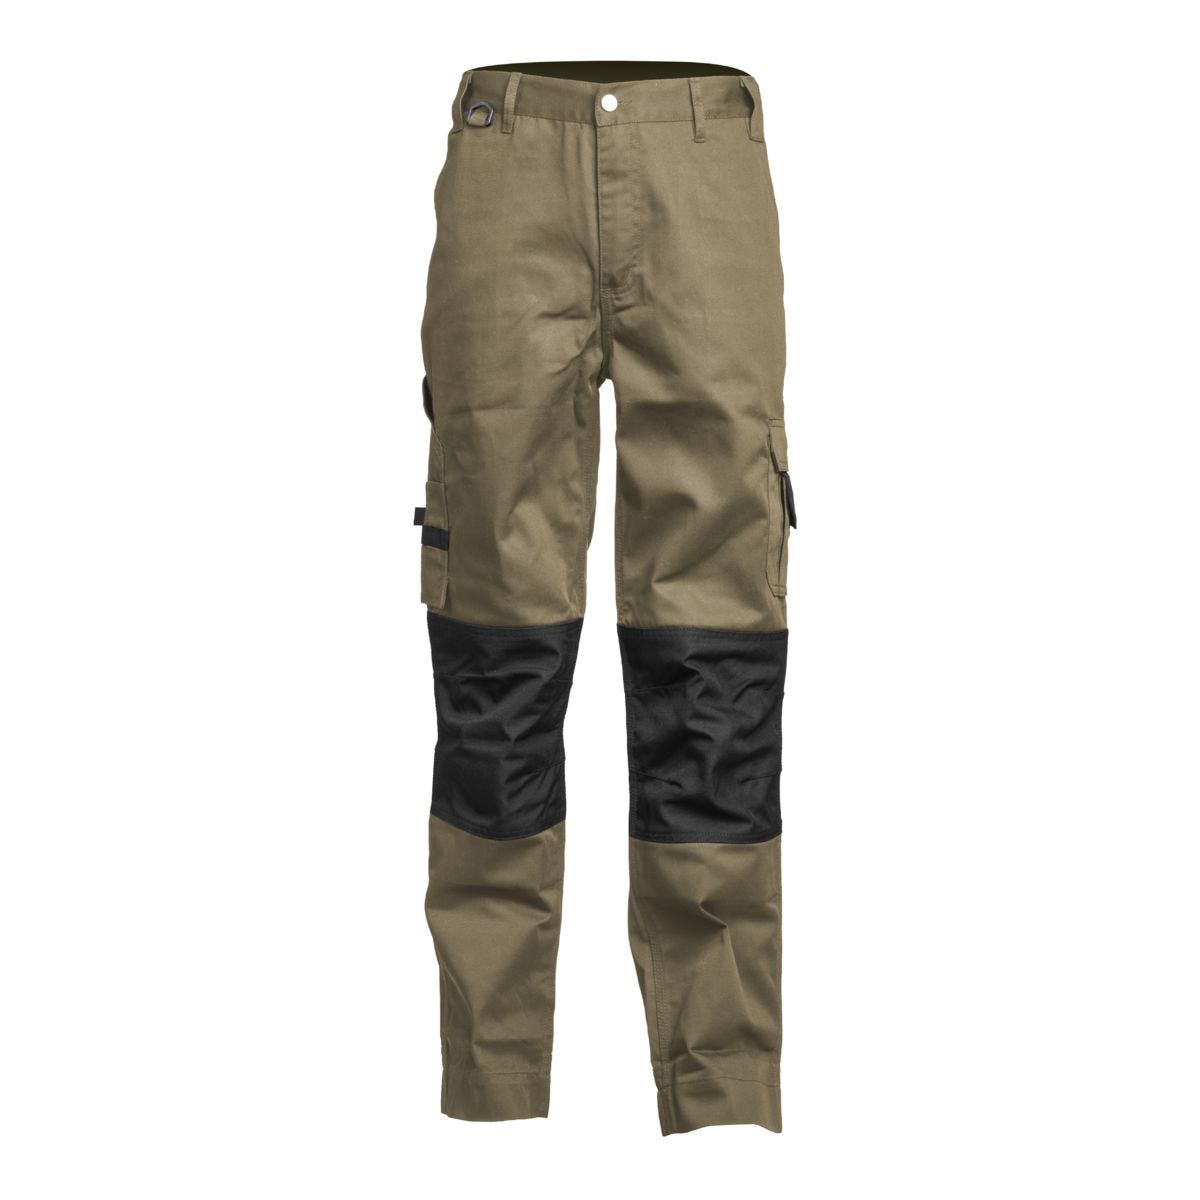 Pantalon CLASS beige - COVERGUARD - Taille XS 0